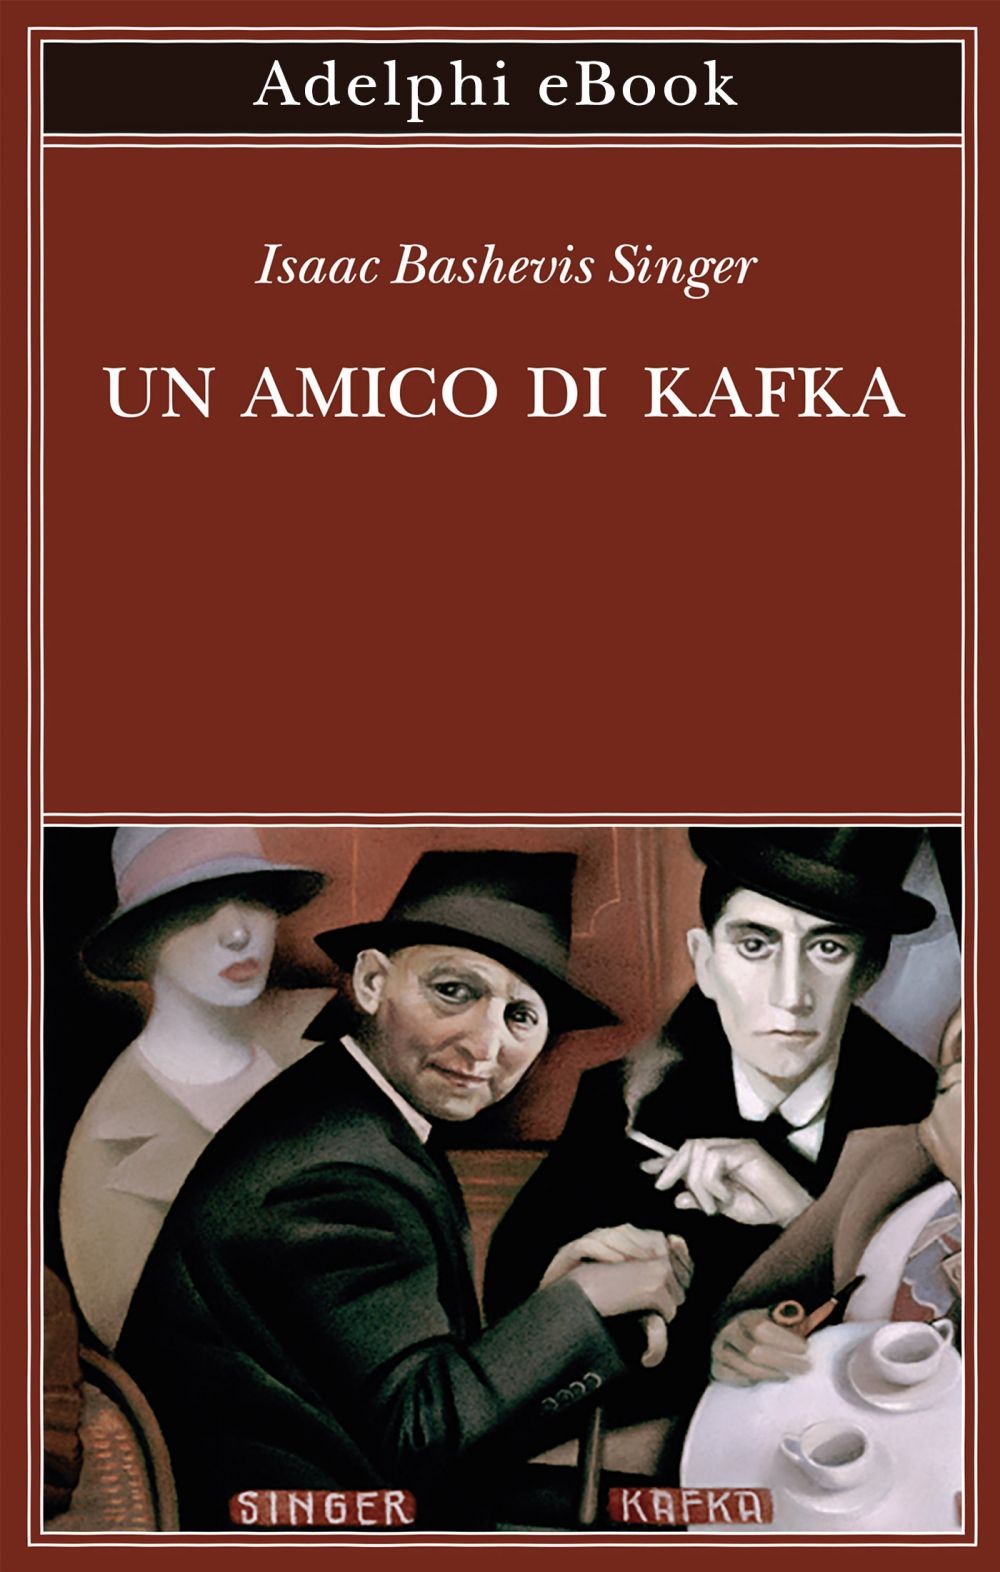 Un amico di Kafka - Librerie.coop